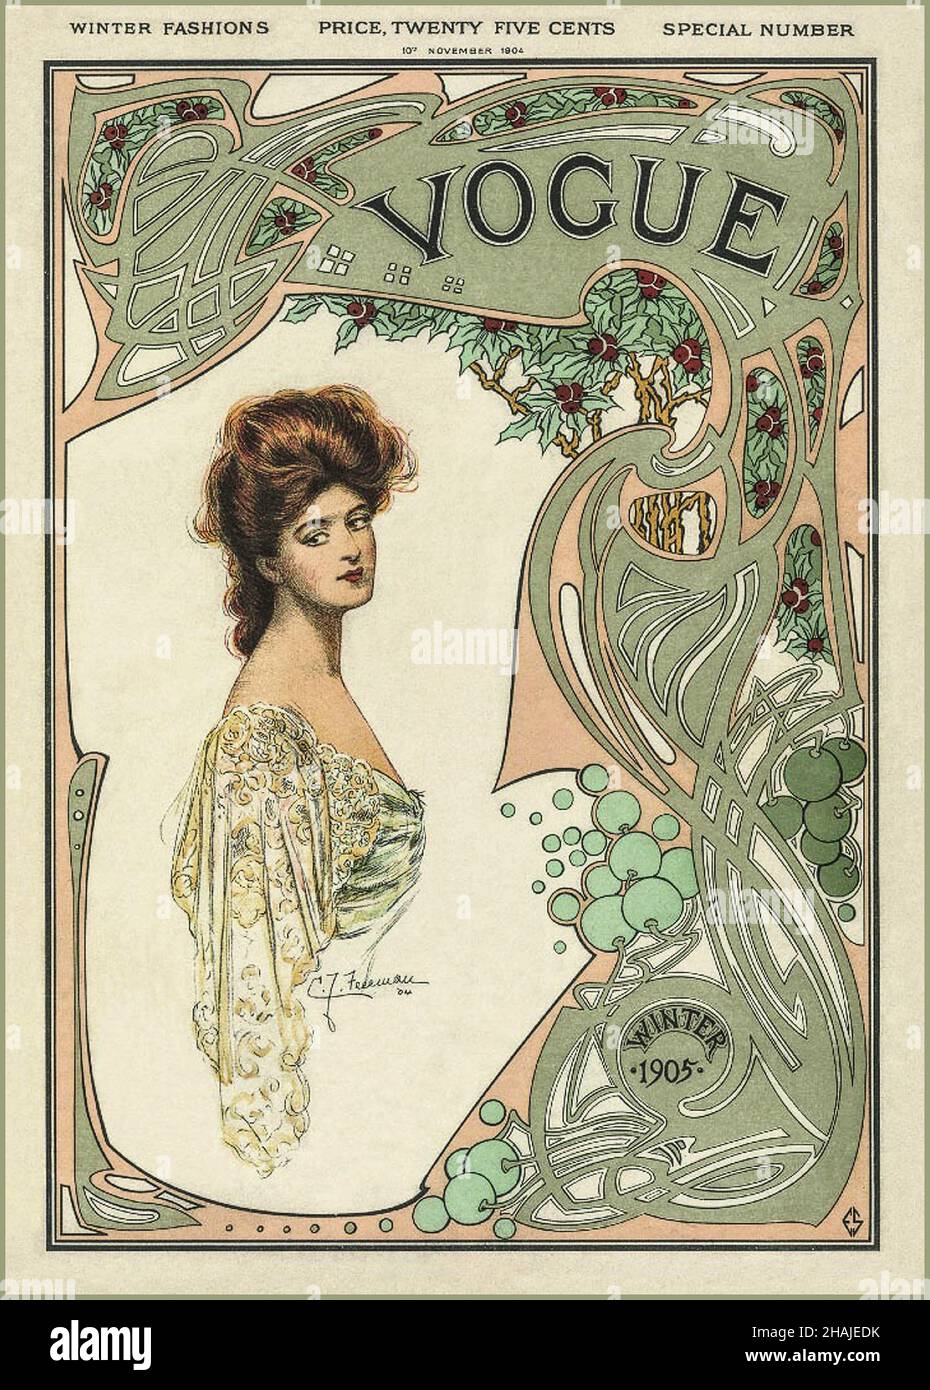 Vogue Art Nouveau Archive 1903 Front Cover Magazine Winter Fashions 25 cents America USA Stock Photo